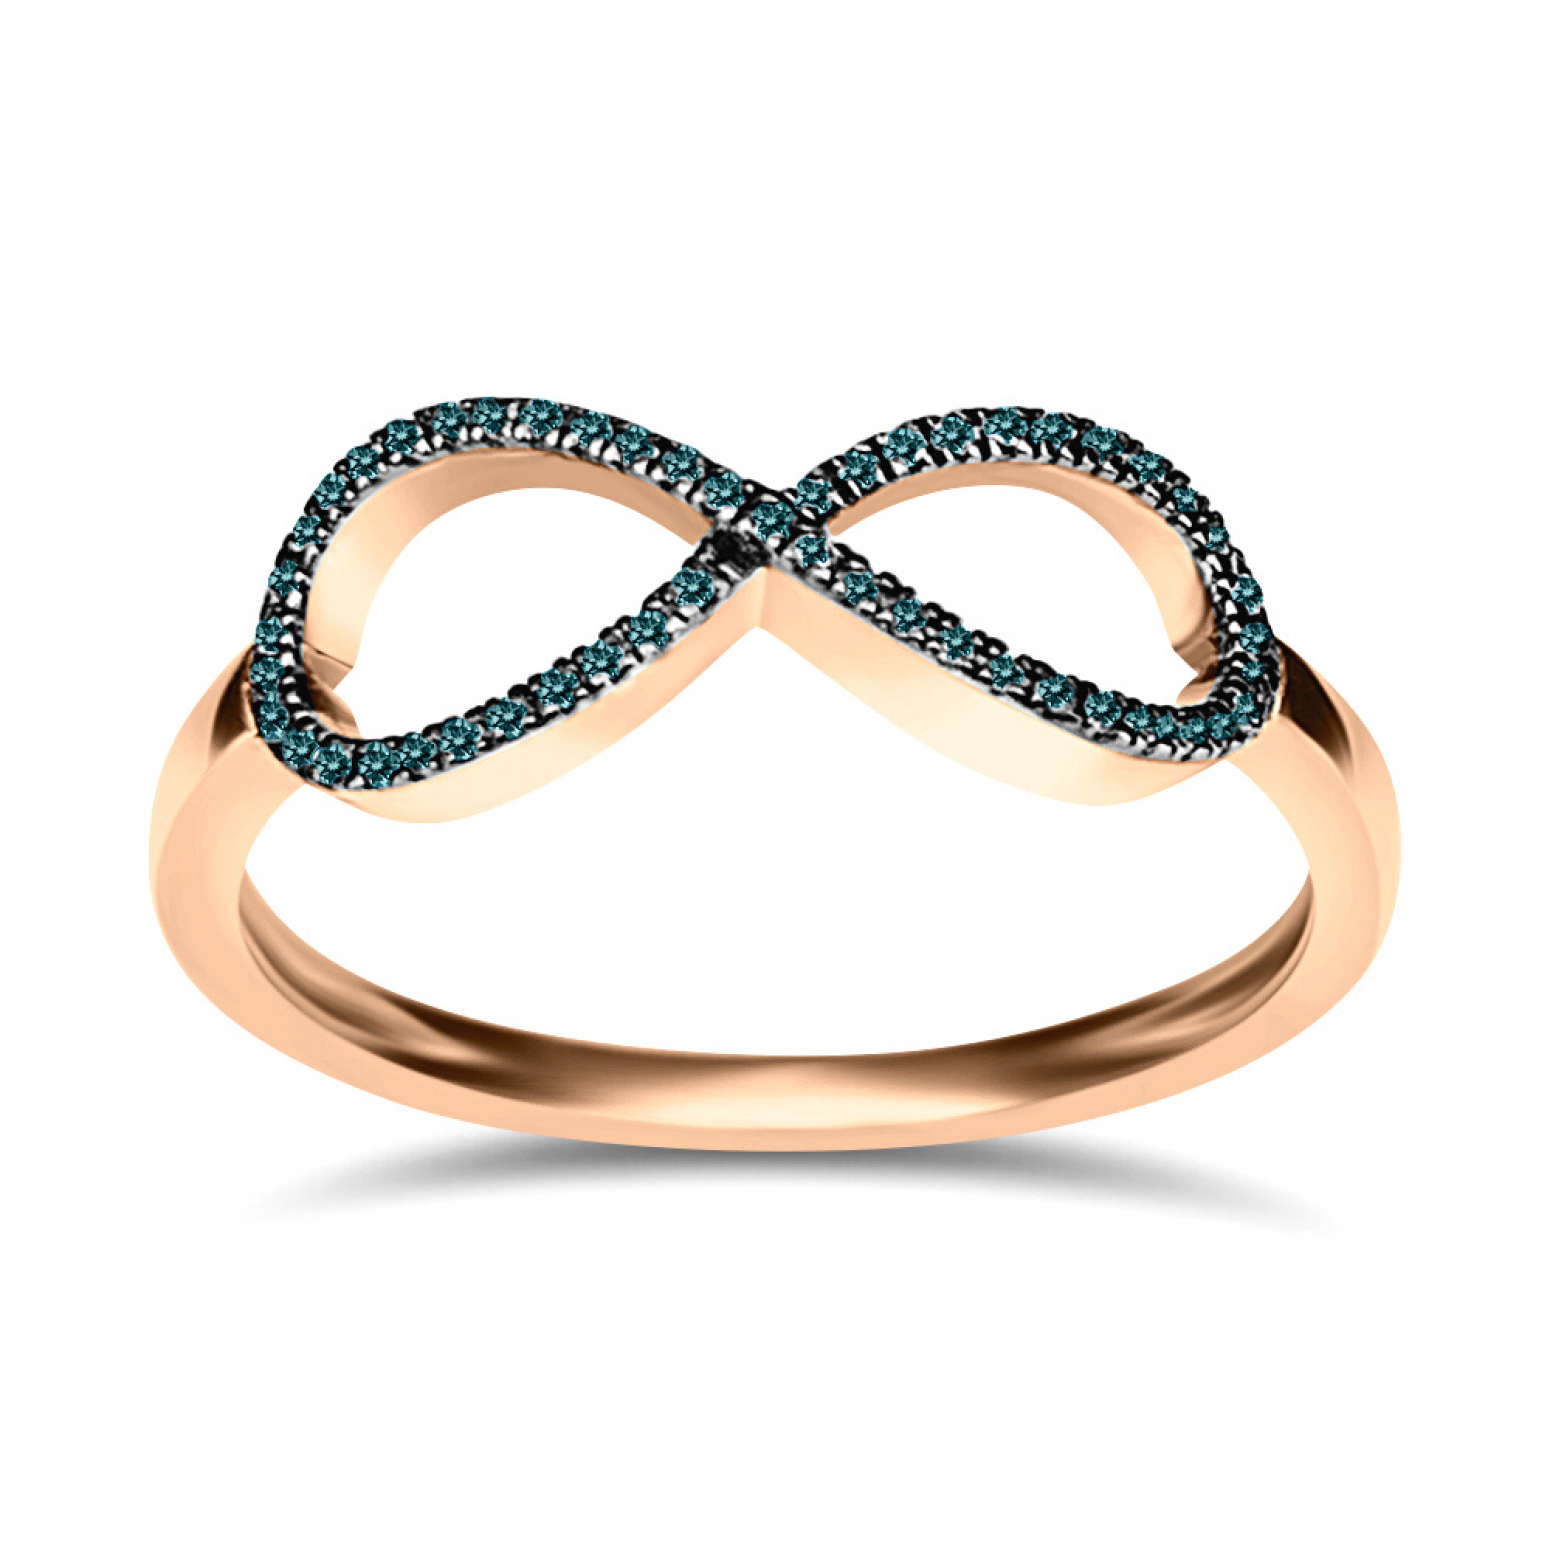 Infinity ring 14K pink gold with blue diamonds 0.08ct, da3881 RINGS Κοσμηματα - chrilia.gr